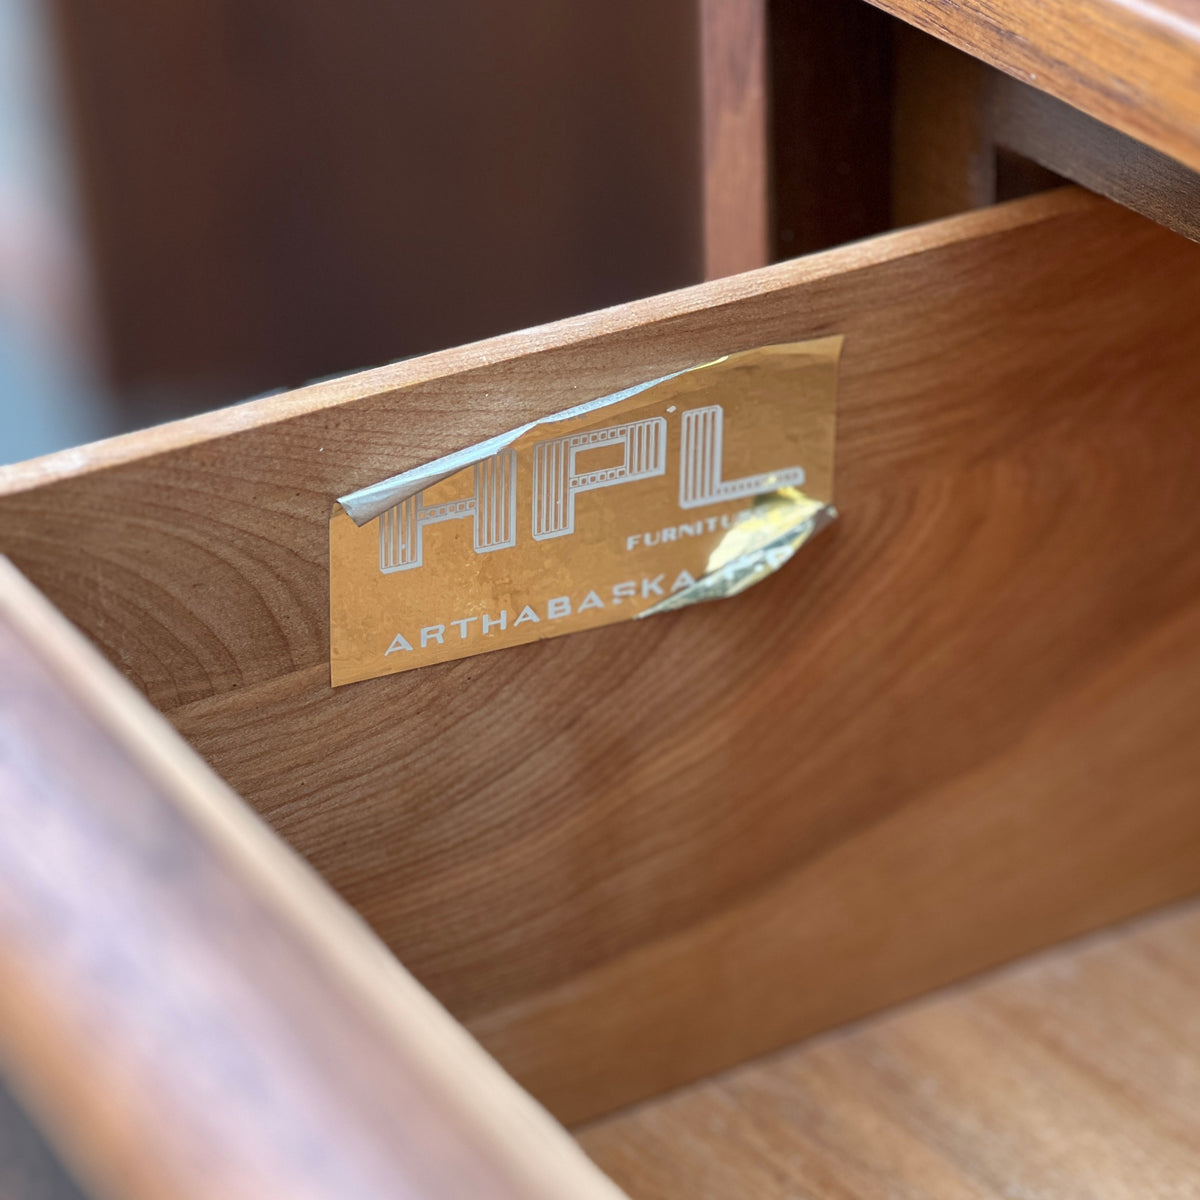 Mid Century Walnut Dresser by HPL